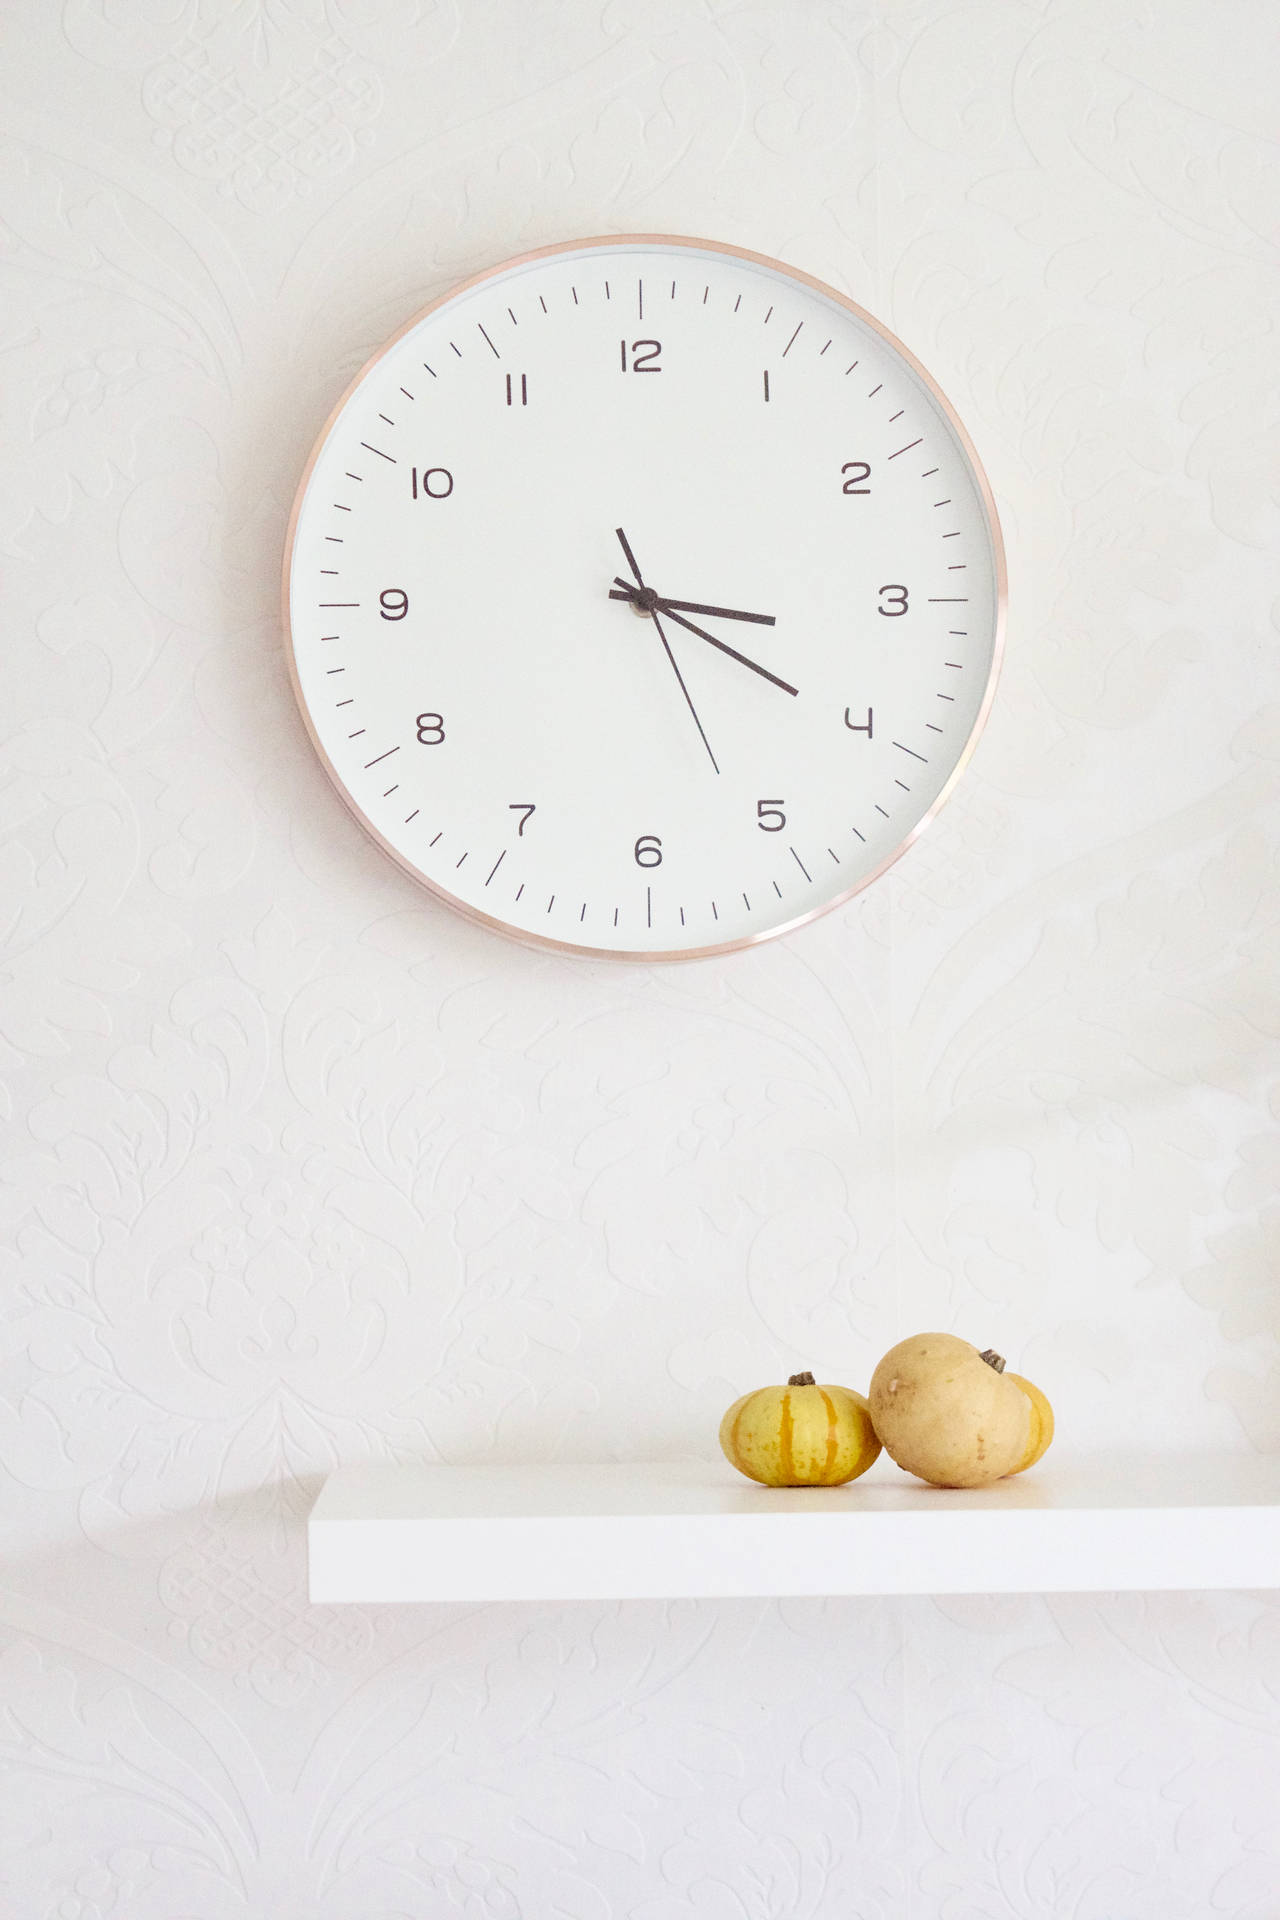 Minimalist Clock Image Wallpaper